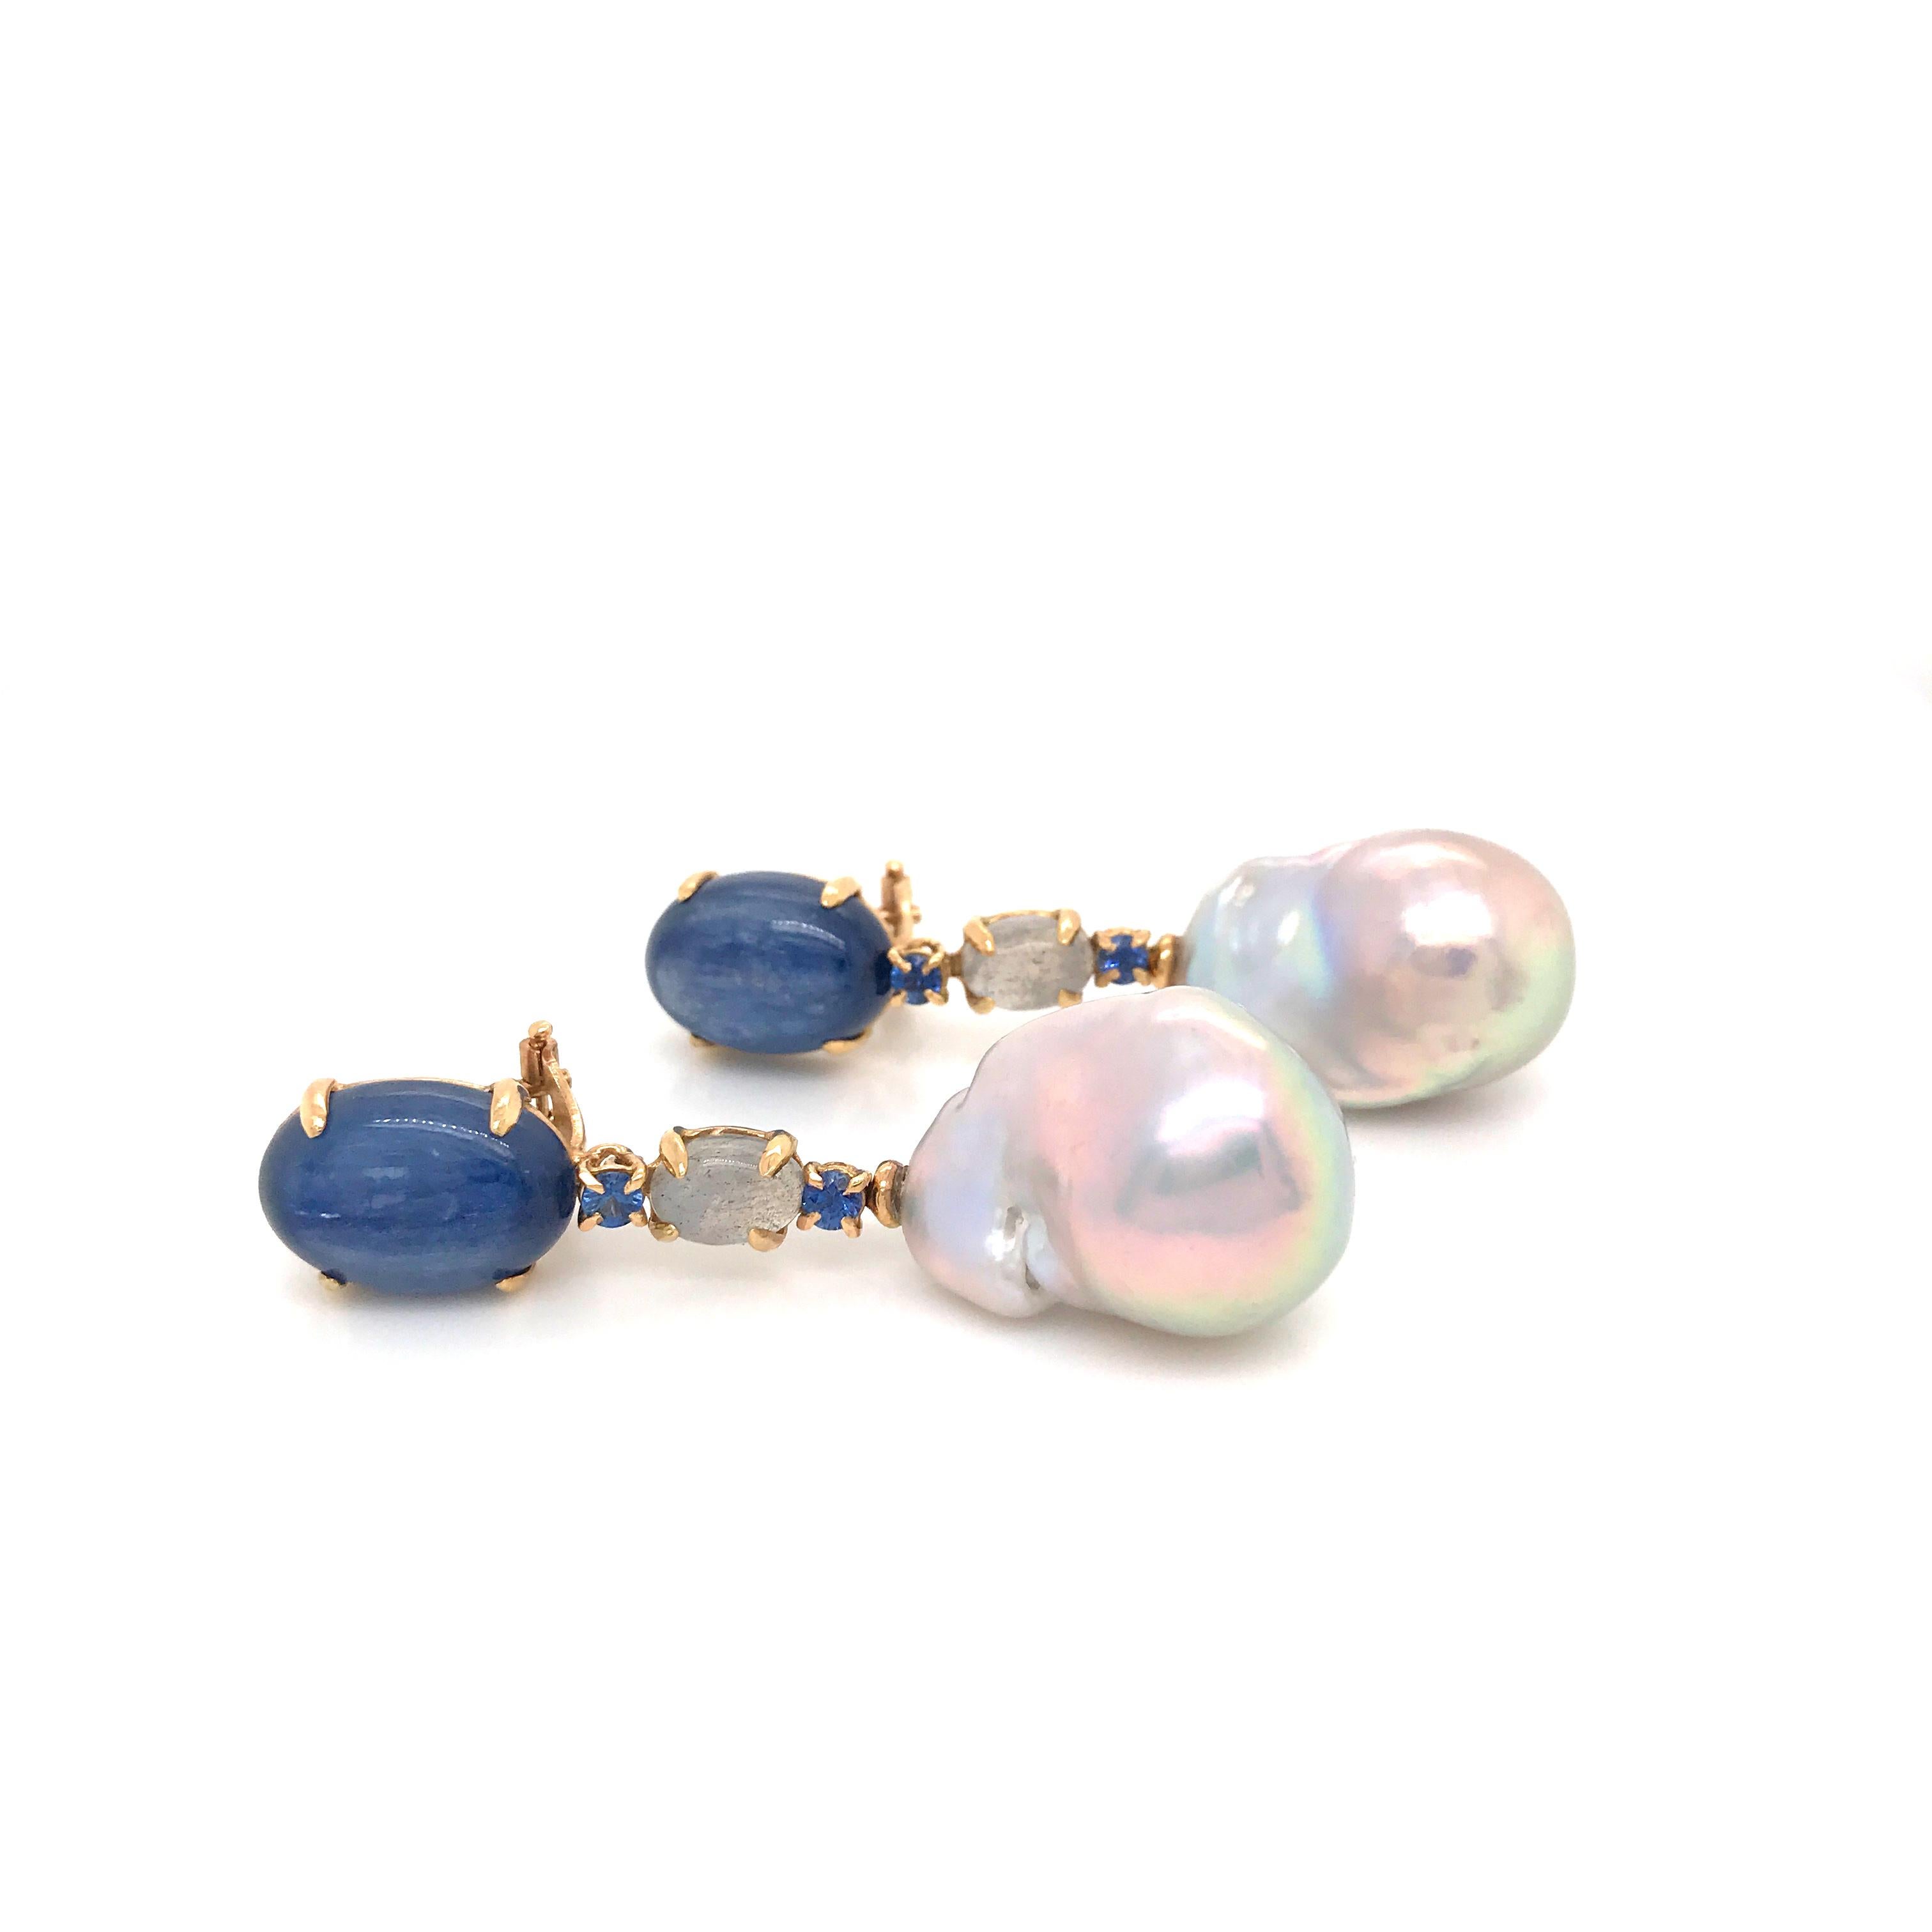 Wonderful Earrings
Grey Gold 18 Carat 5.3 grams
Kyanites Sapphires 
Pearls 0,32 Carat 
Labradorites